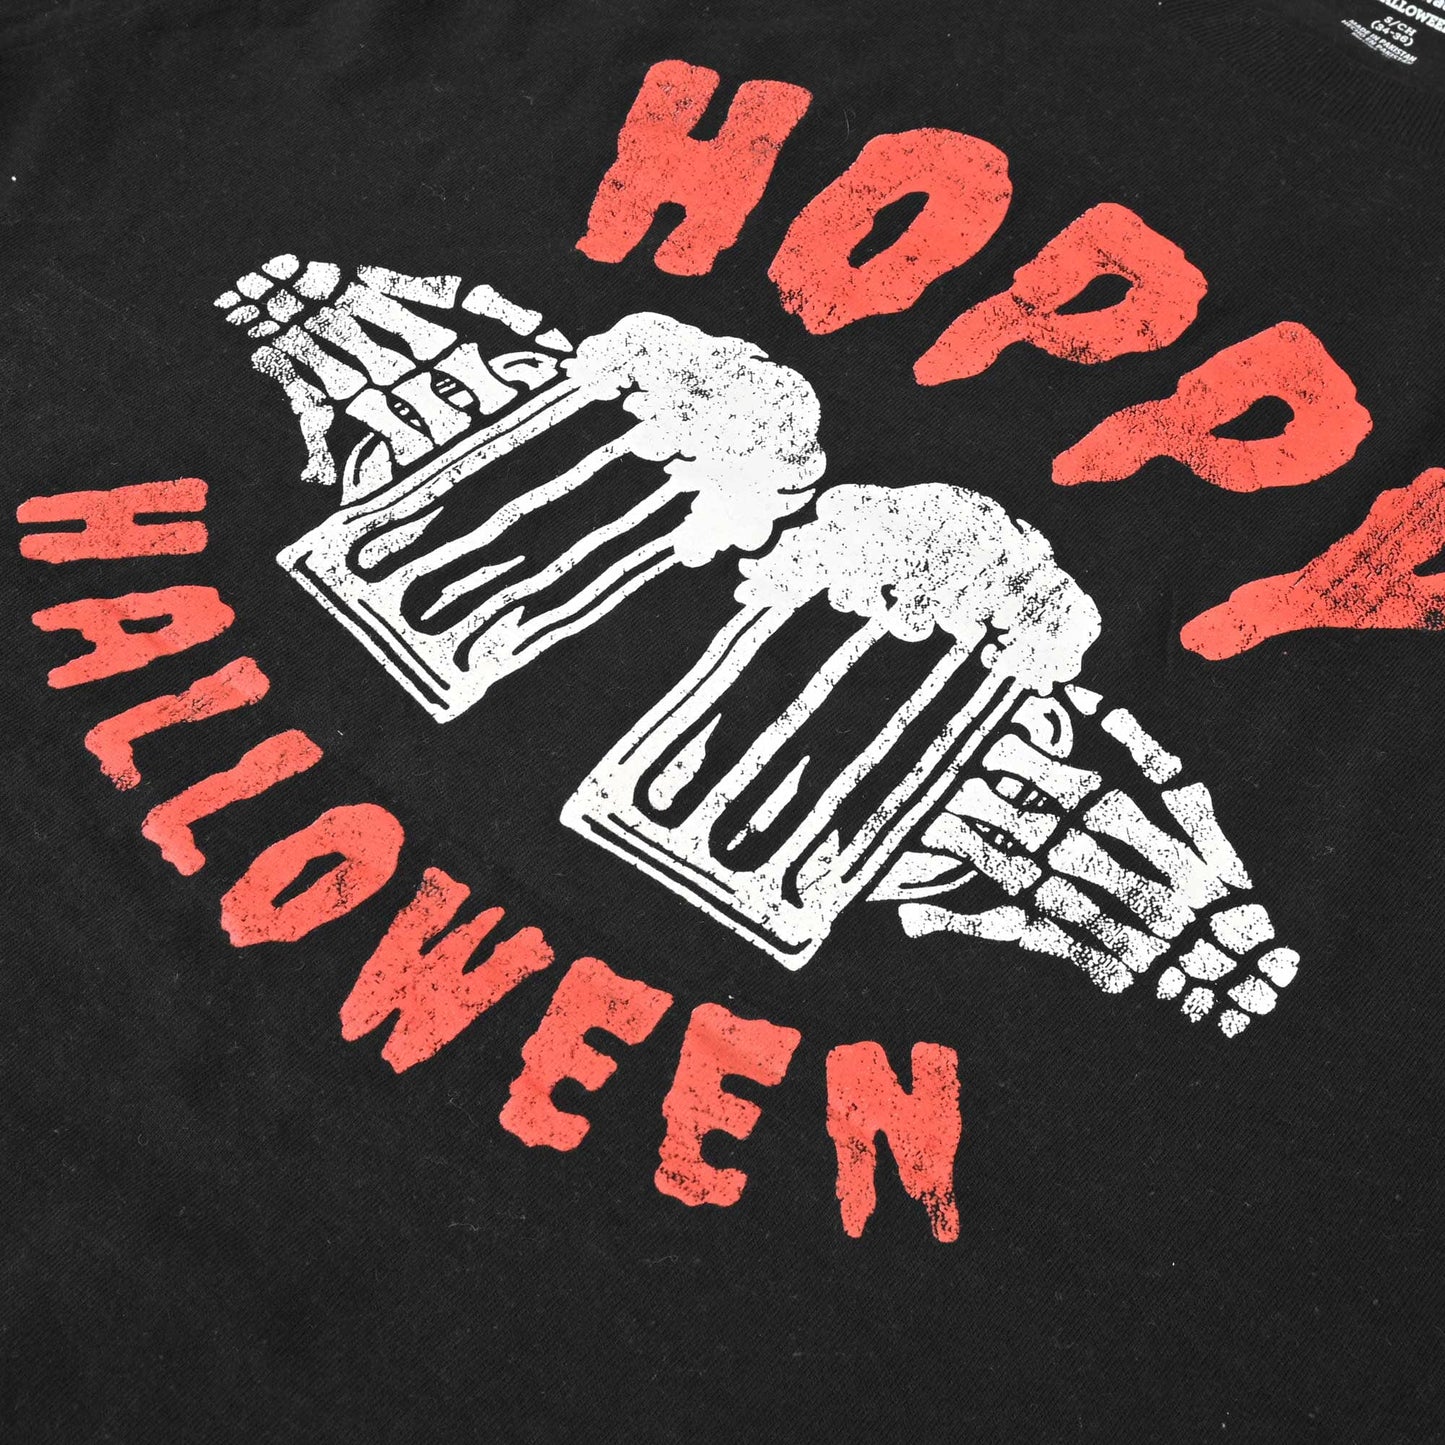 Celebrate Men's Hoppy Halloween Printed Short Sleeve Tee Shirt Men's Tee Shirt HAS Apparel 